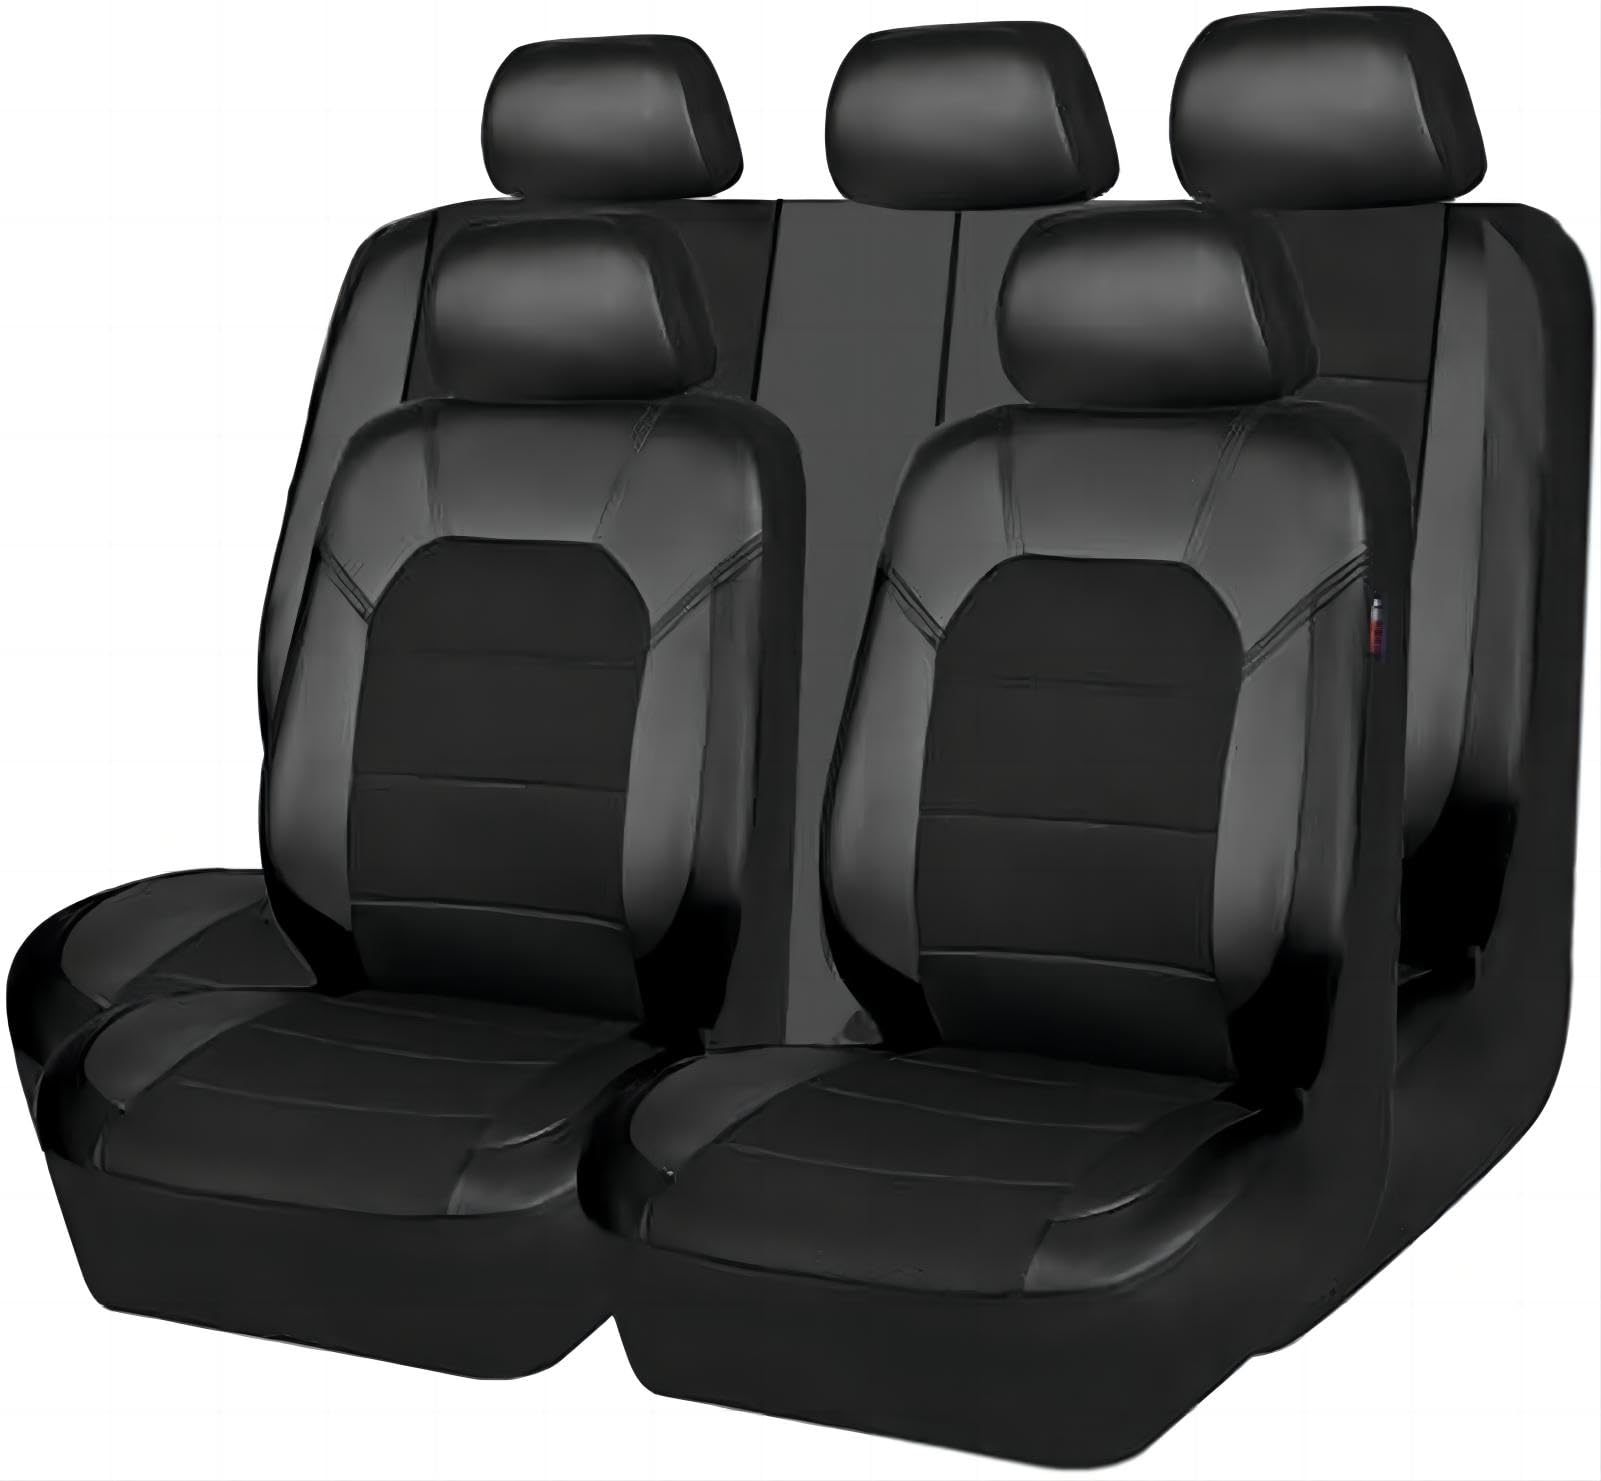 HSHTTKL Auto Sitzbezügesets für Mitsubishi Outlander (5seats) 2013-2016, Auto Schonbezug Full Set Leder Sitzbezug Vordersitze Rücksitzschoner Auto Zubehör,Black von HSHTTKL